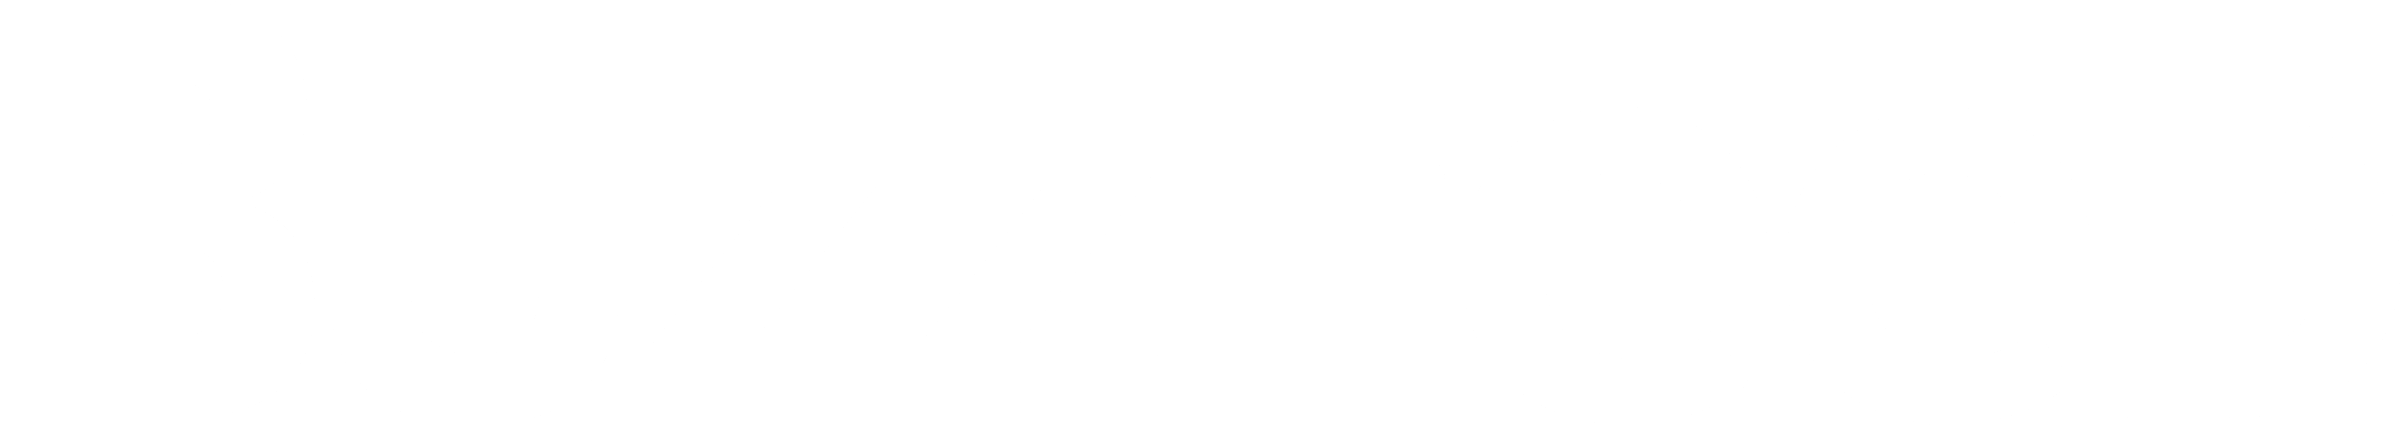 BuzzFeed Logo - BuzzFeed Logo PNG Transparent & SVG Vector